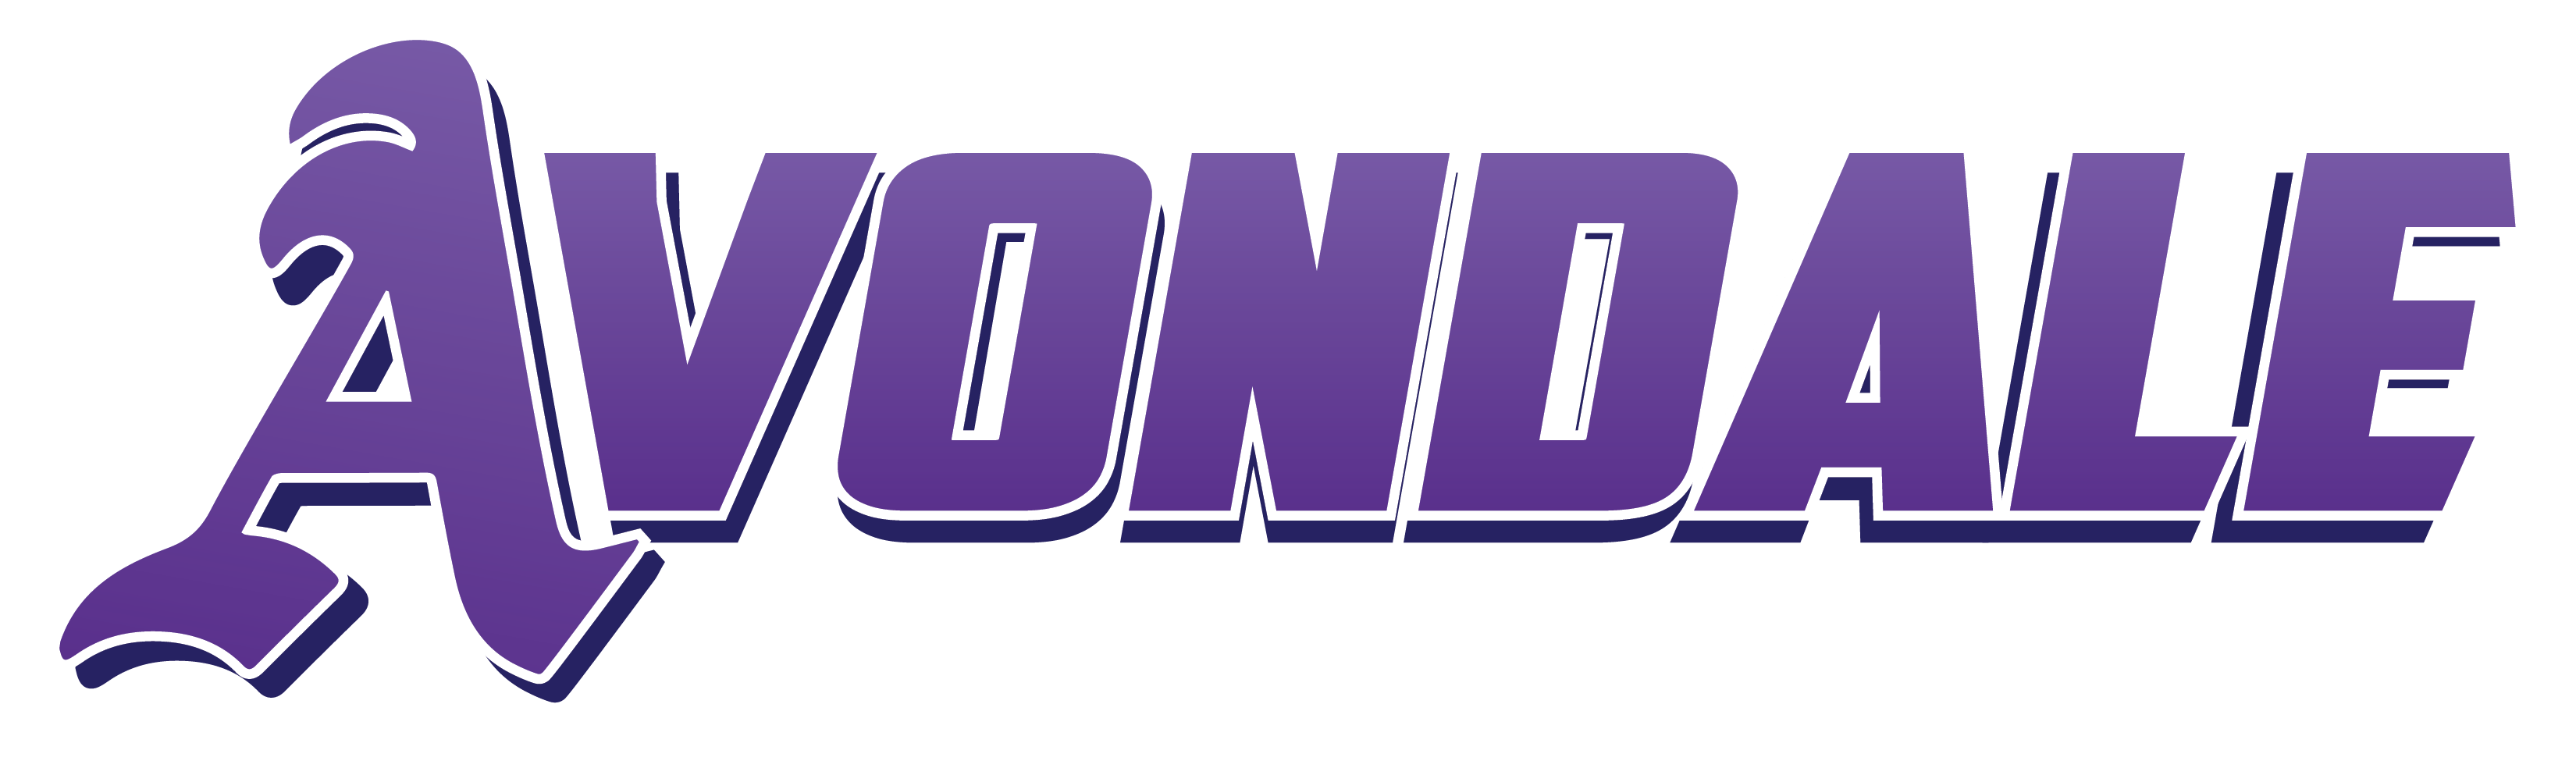 Avondale Logo